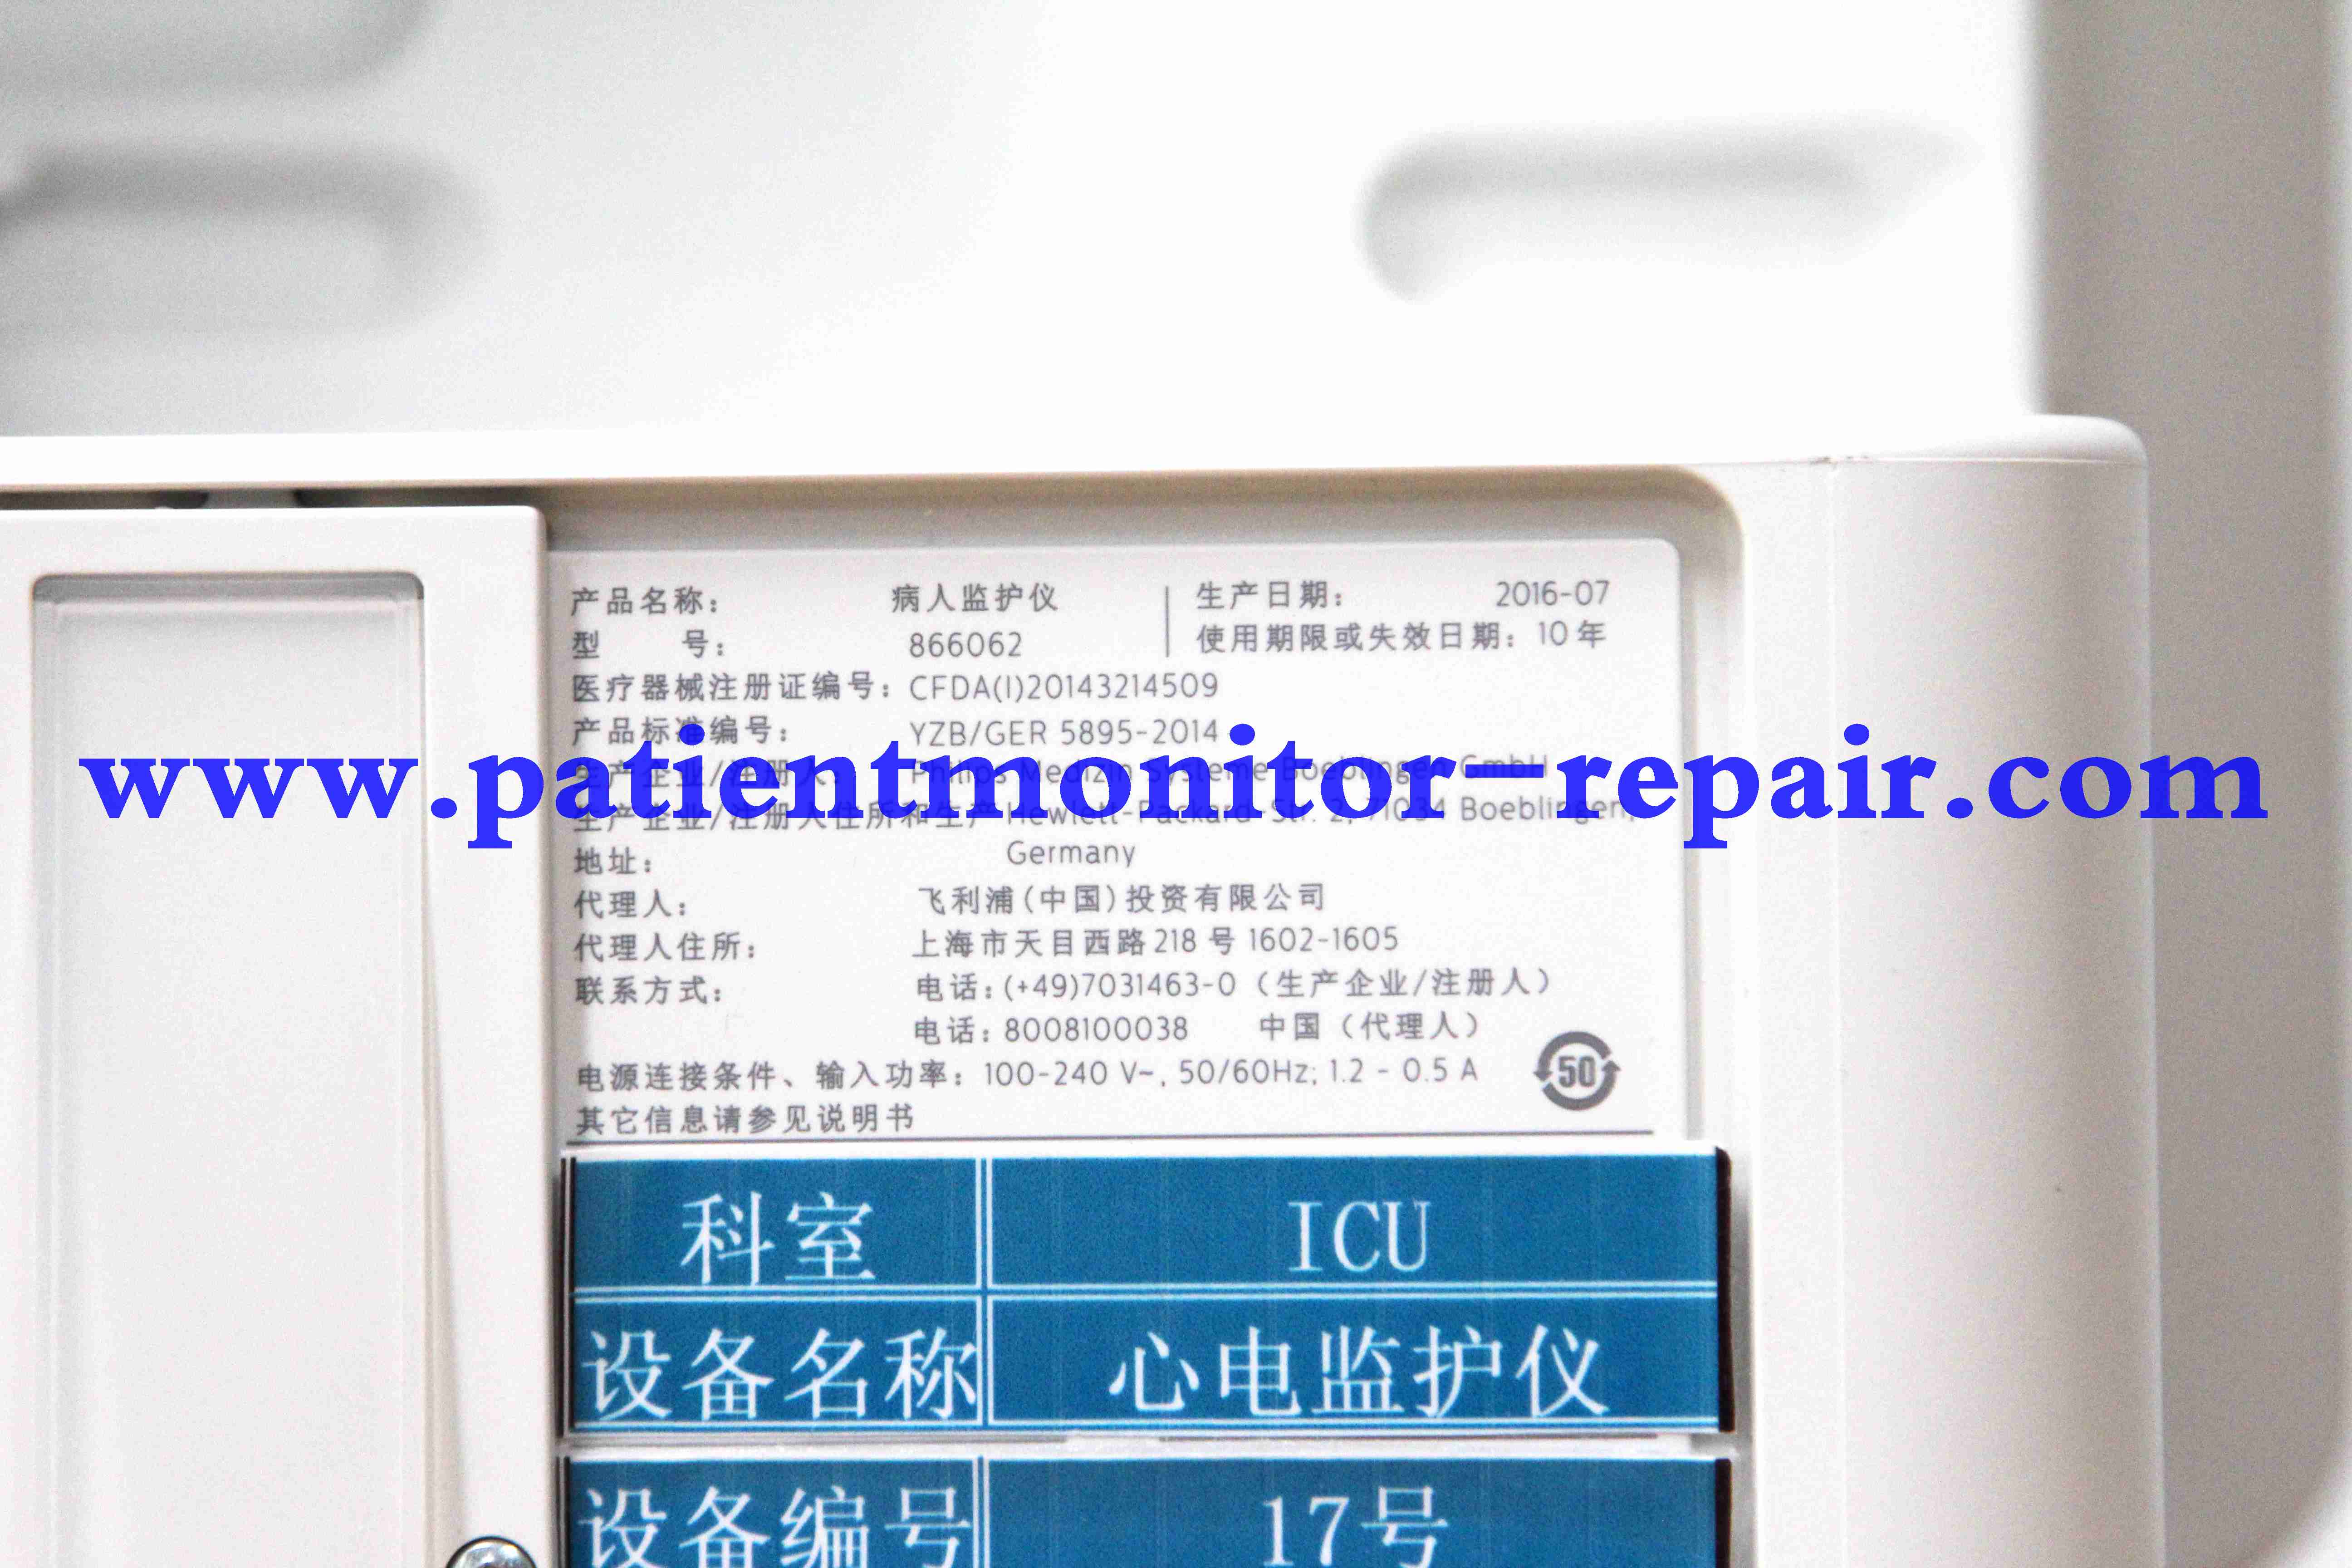  IntelliVue MX450 patient monitor PN 866062